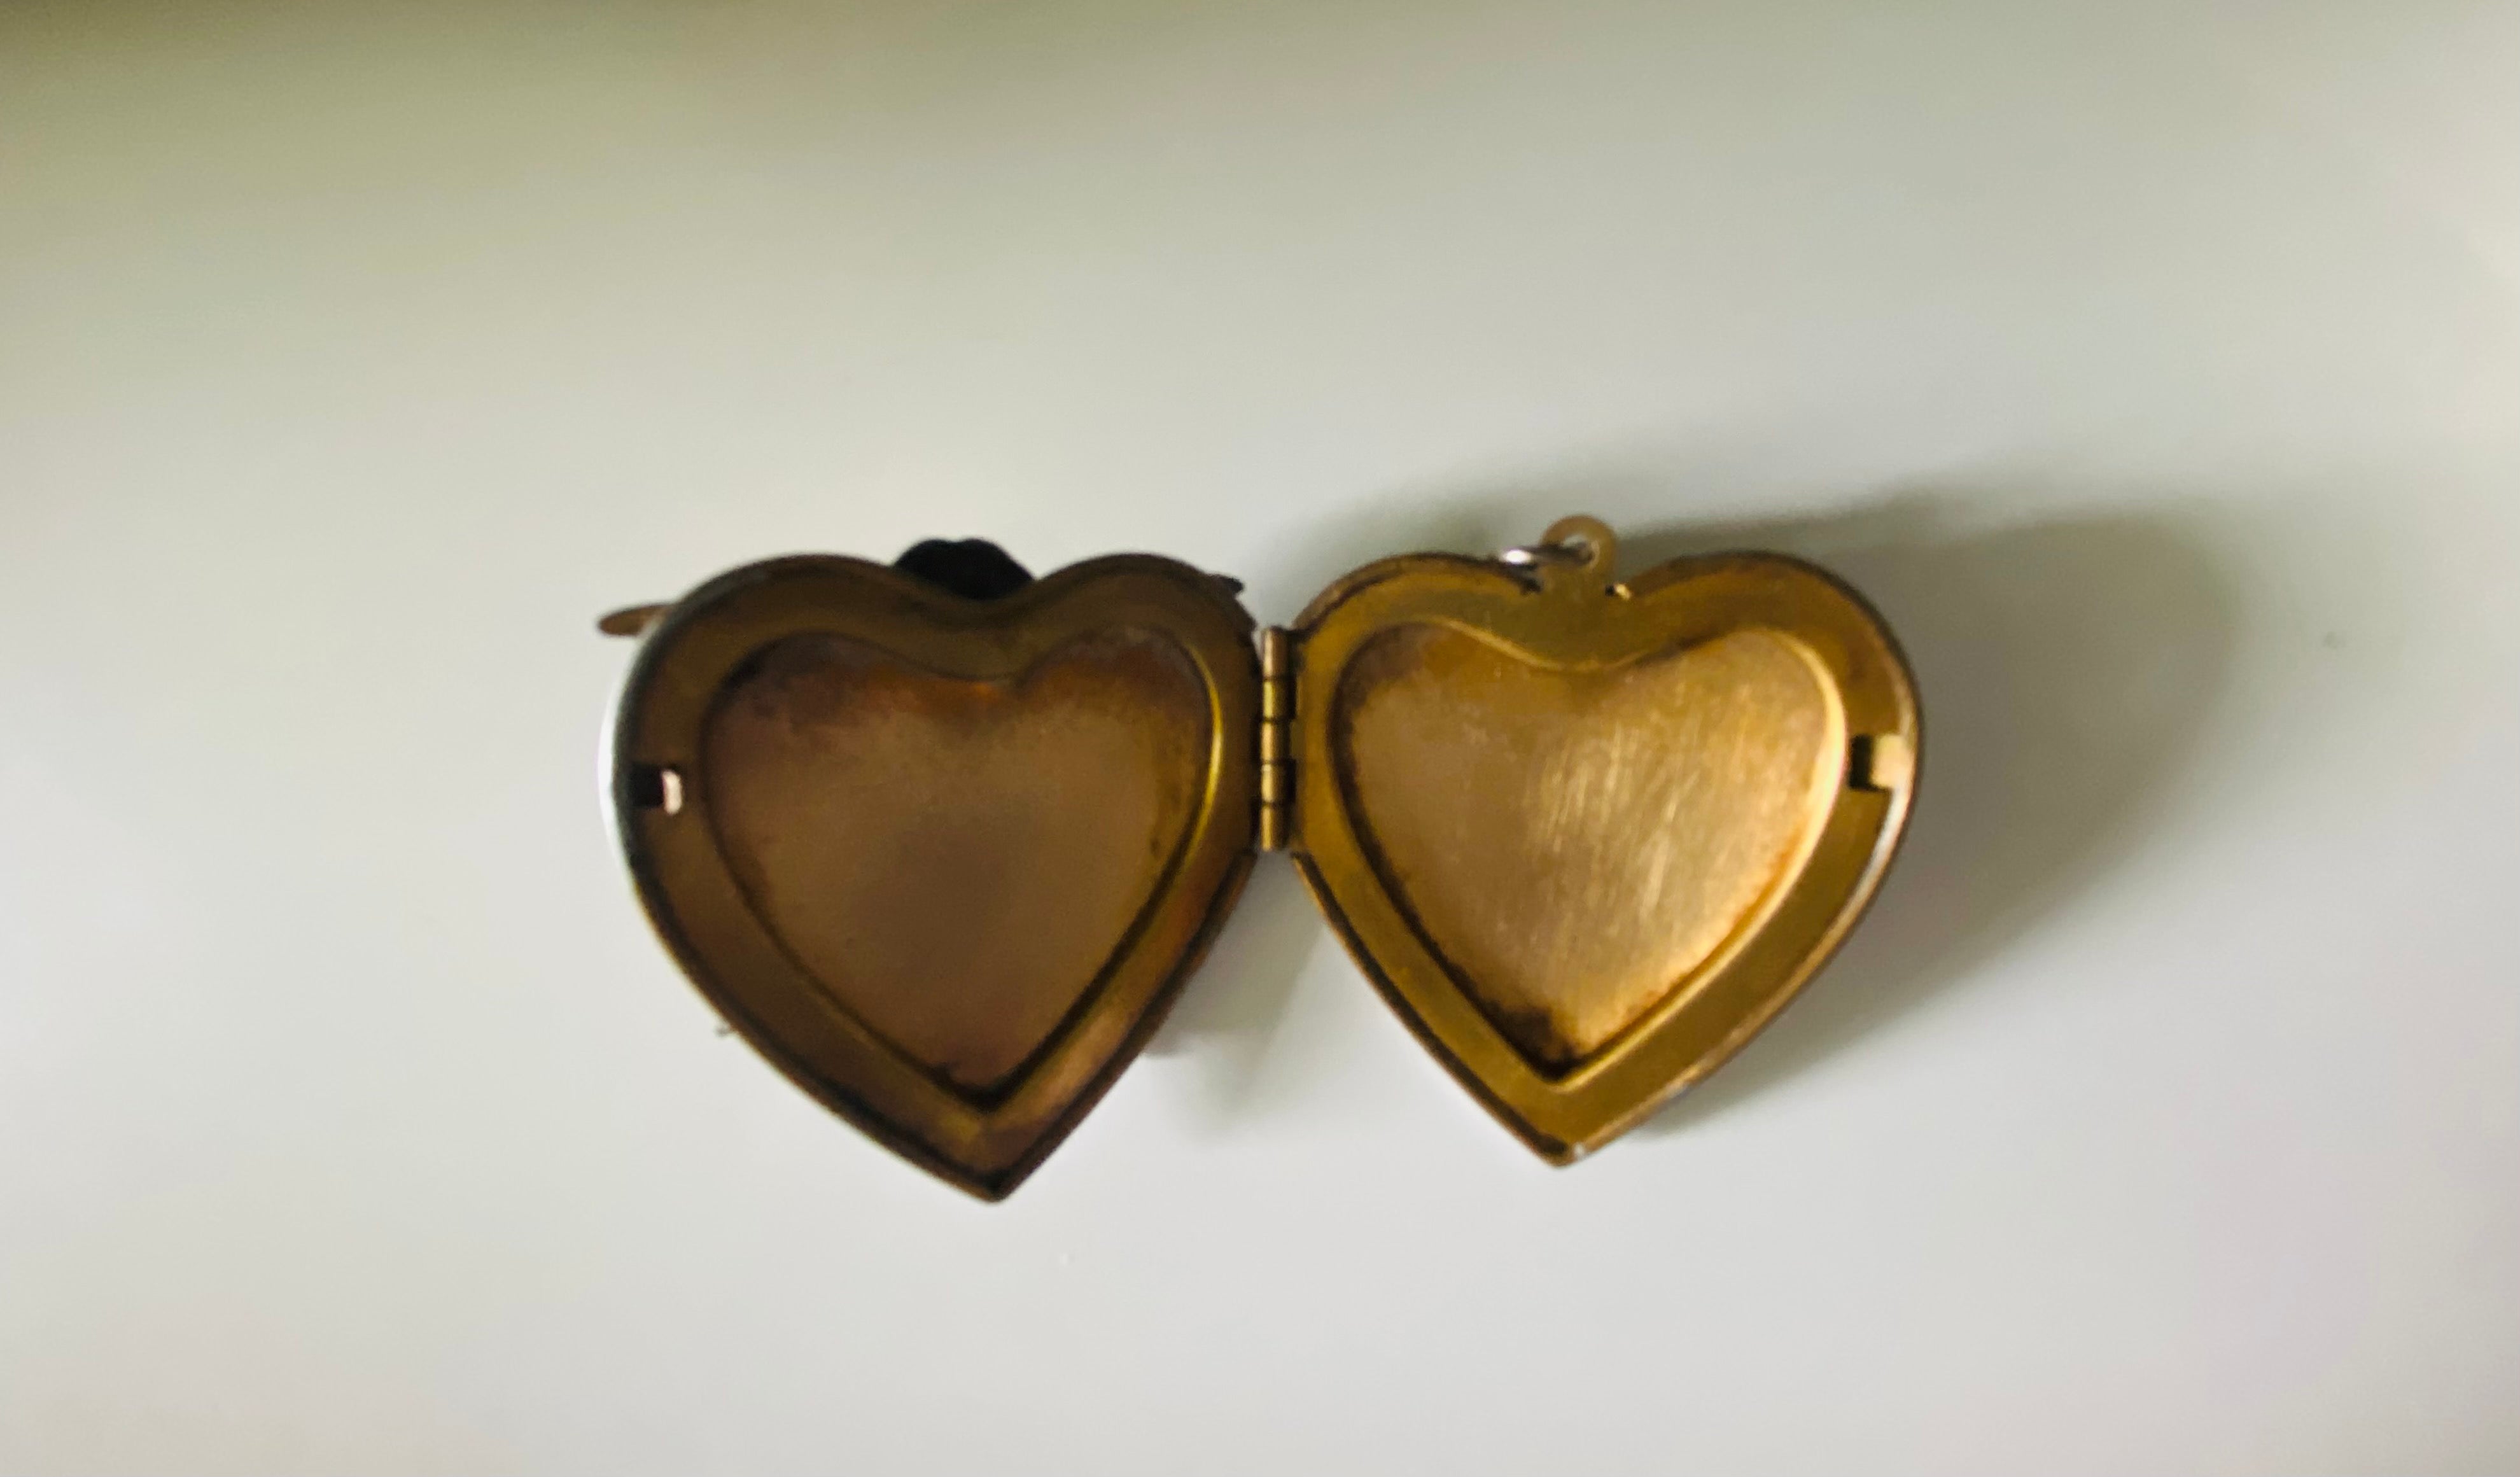 Victorian locket cherub angel heart Silver and Gold necklace pendant photos memories